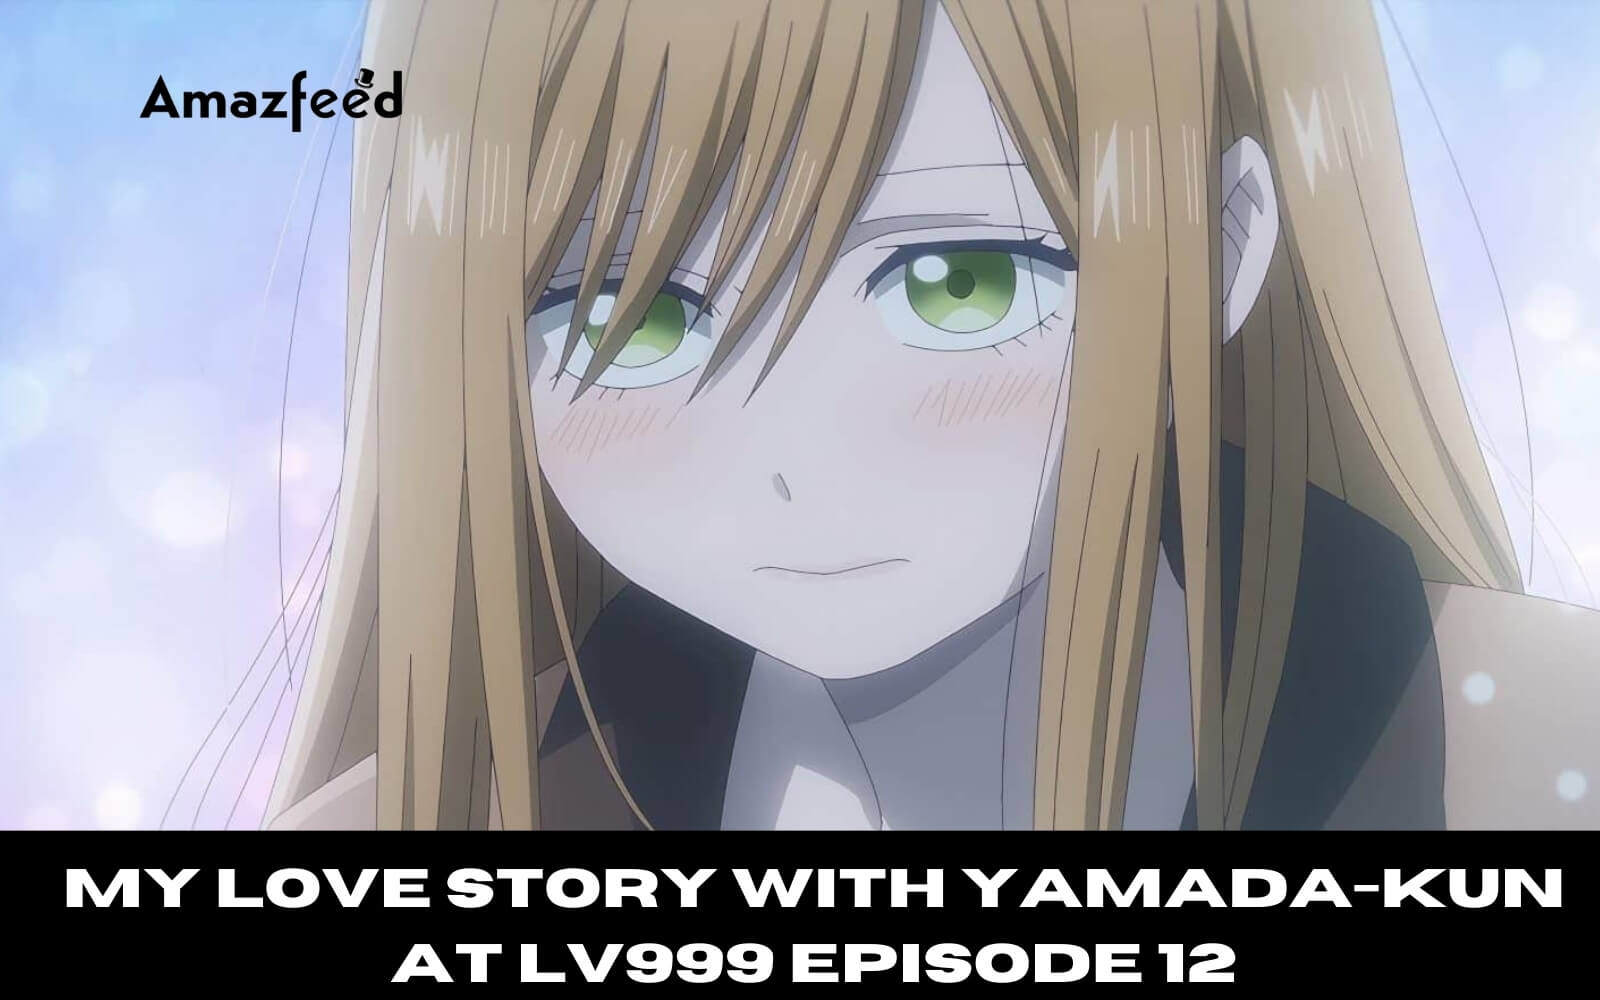 My Love Story with Yamada-kun at Lv999 (TV Series 2023) - IMDb